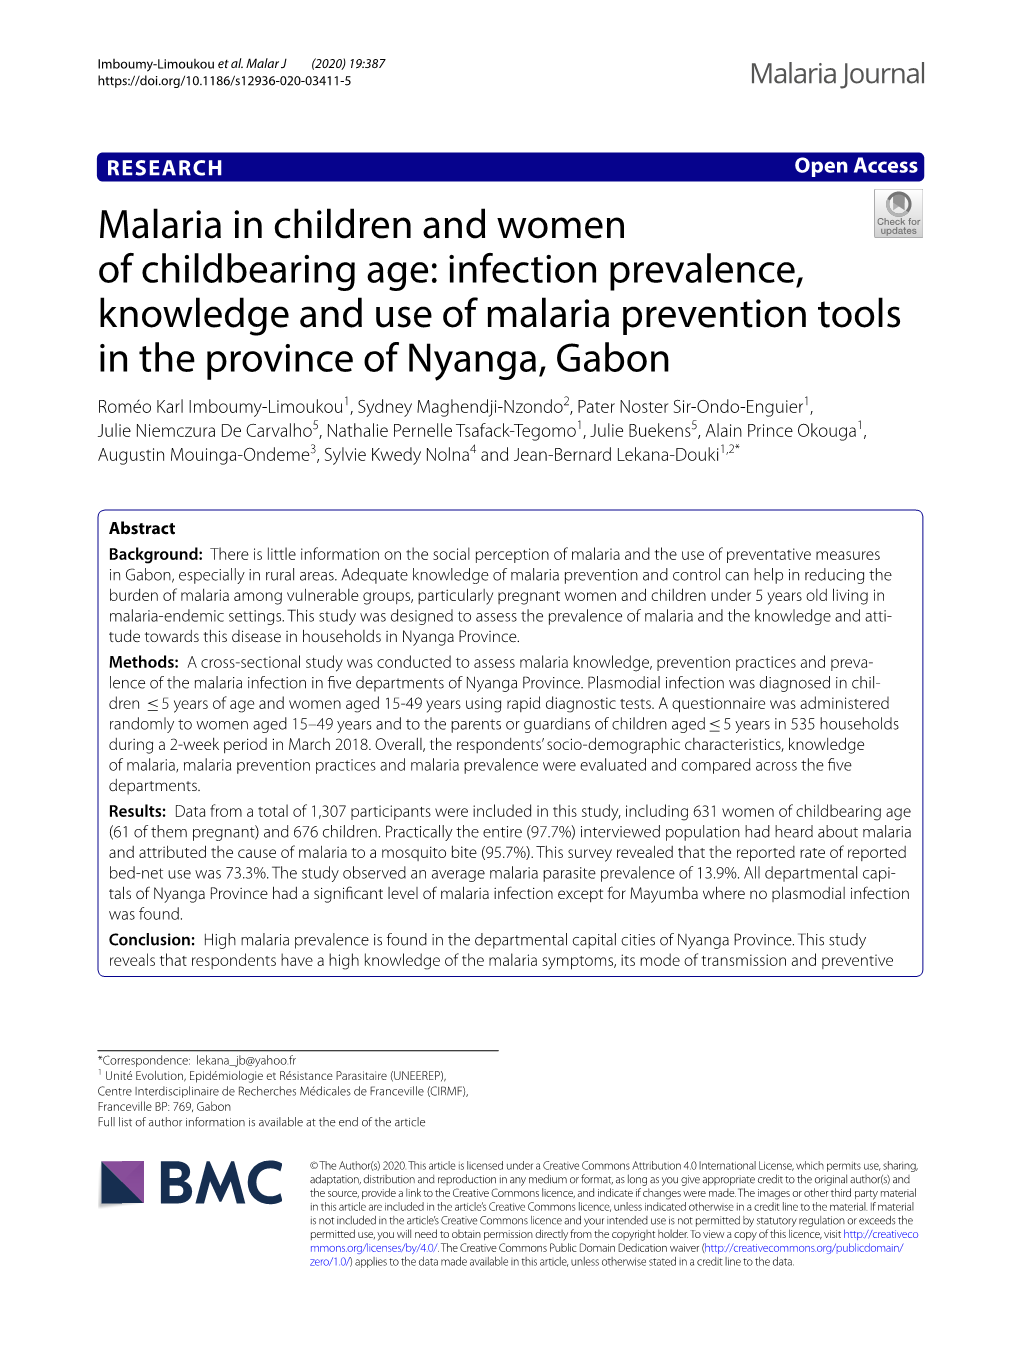 Malaria in Children and Women of Childbearing